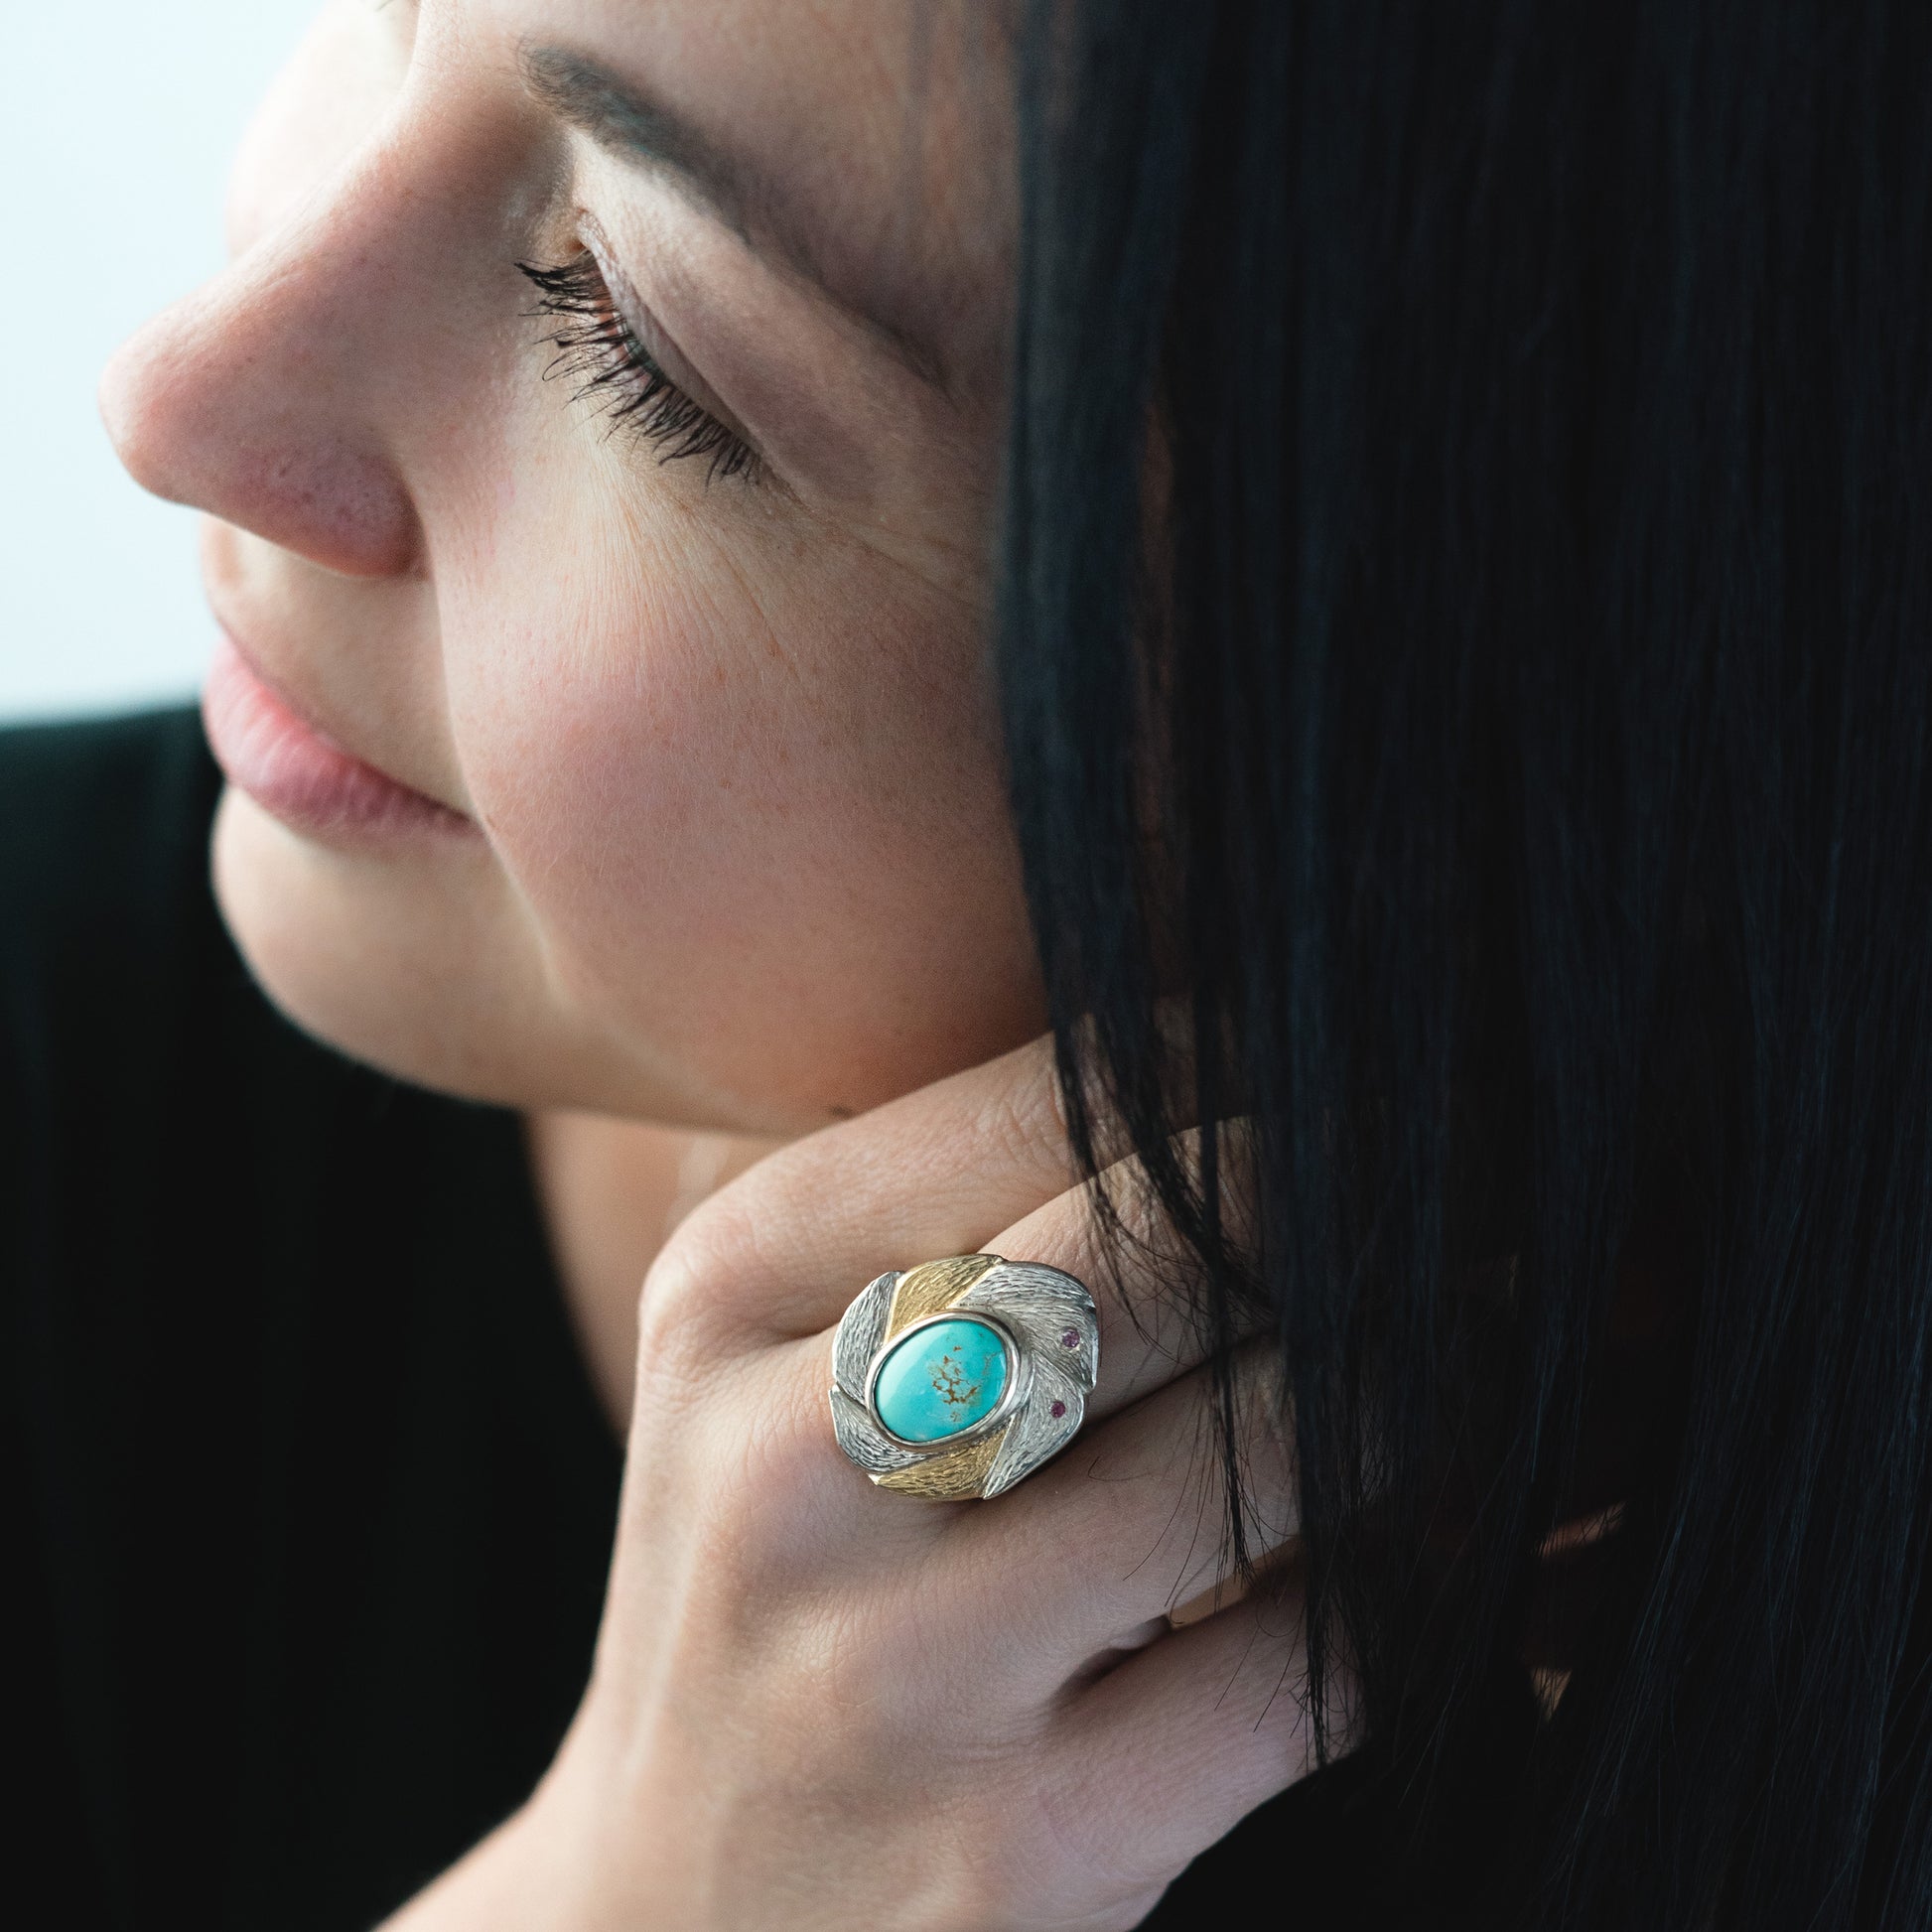 woman wearing teal stone ring